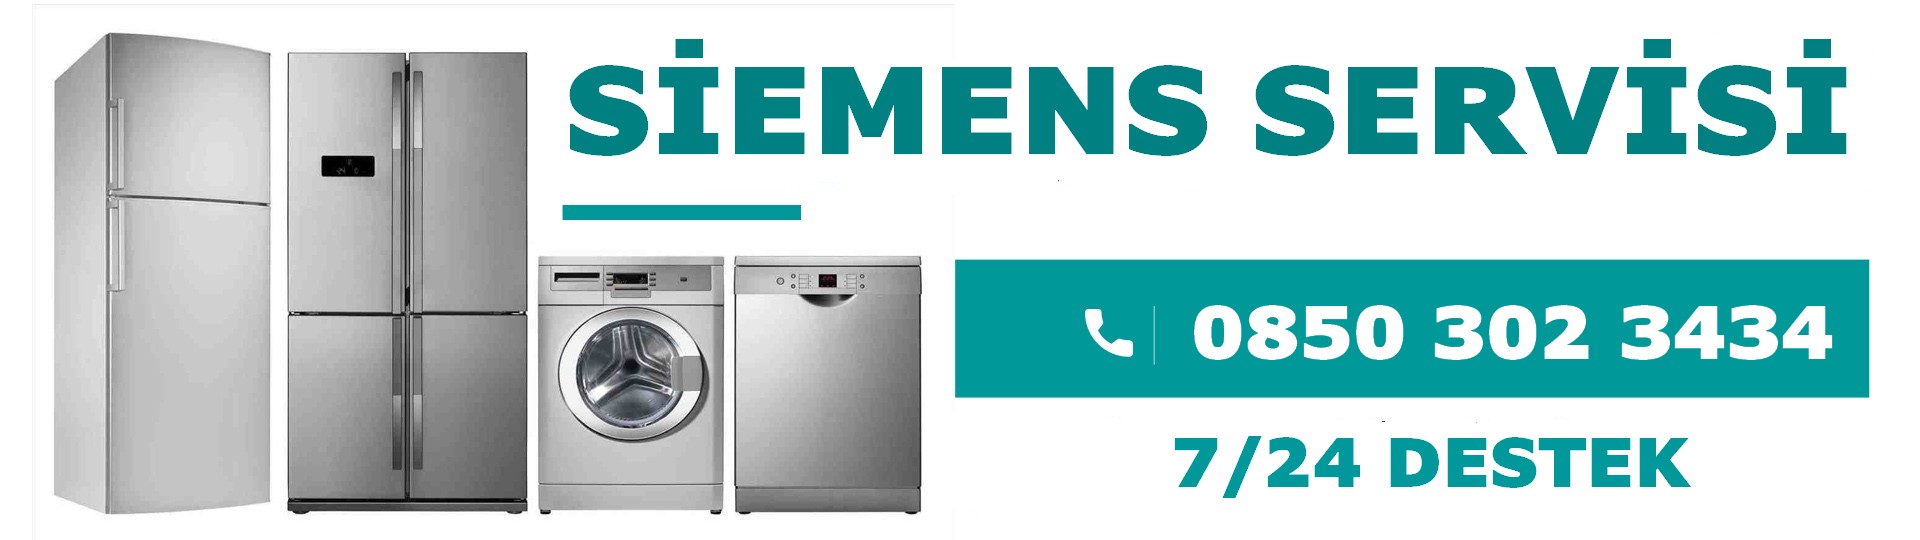 Şehzadeler Siemens Servisi